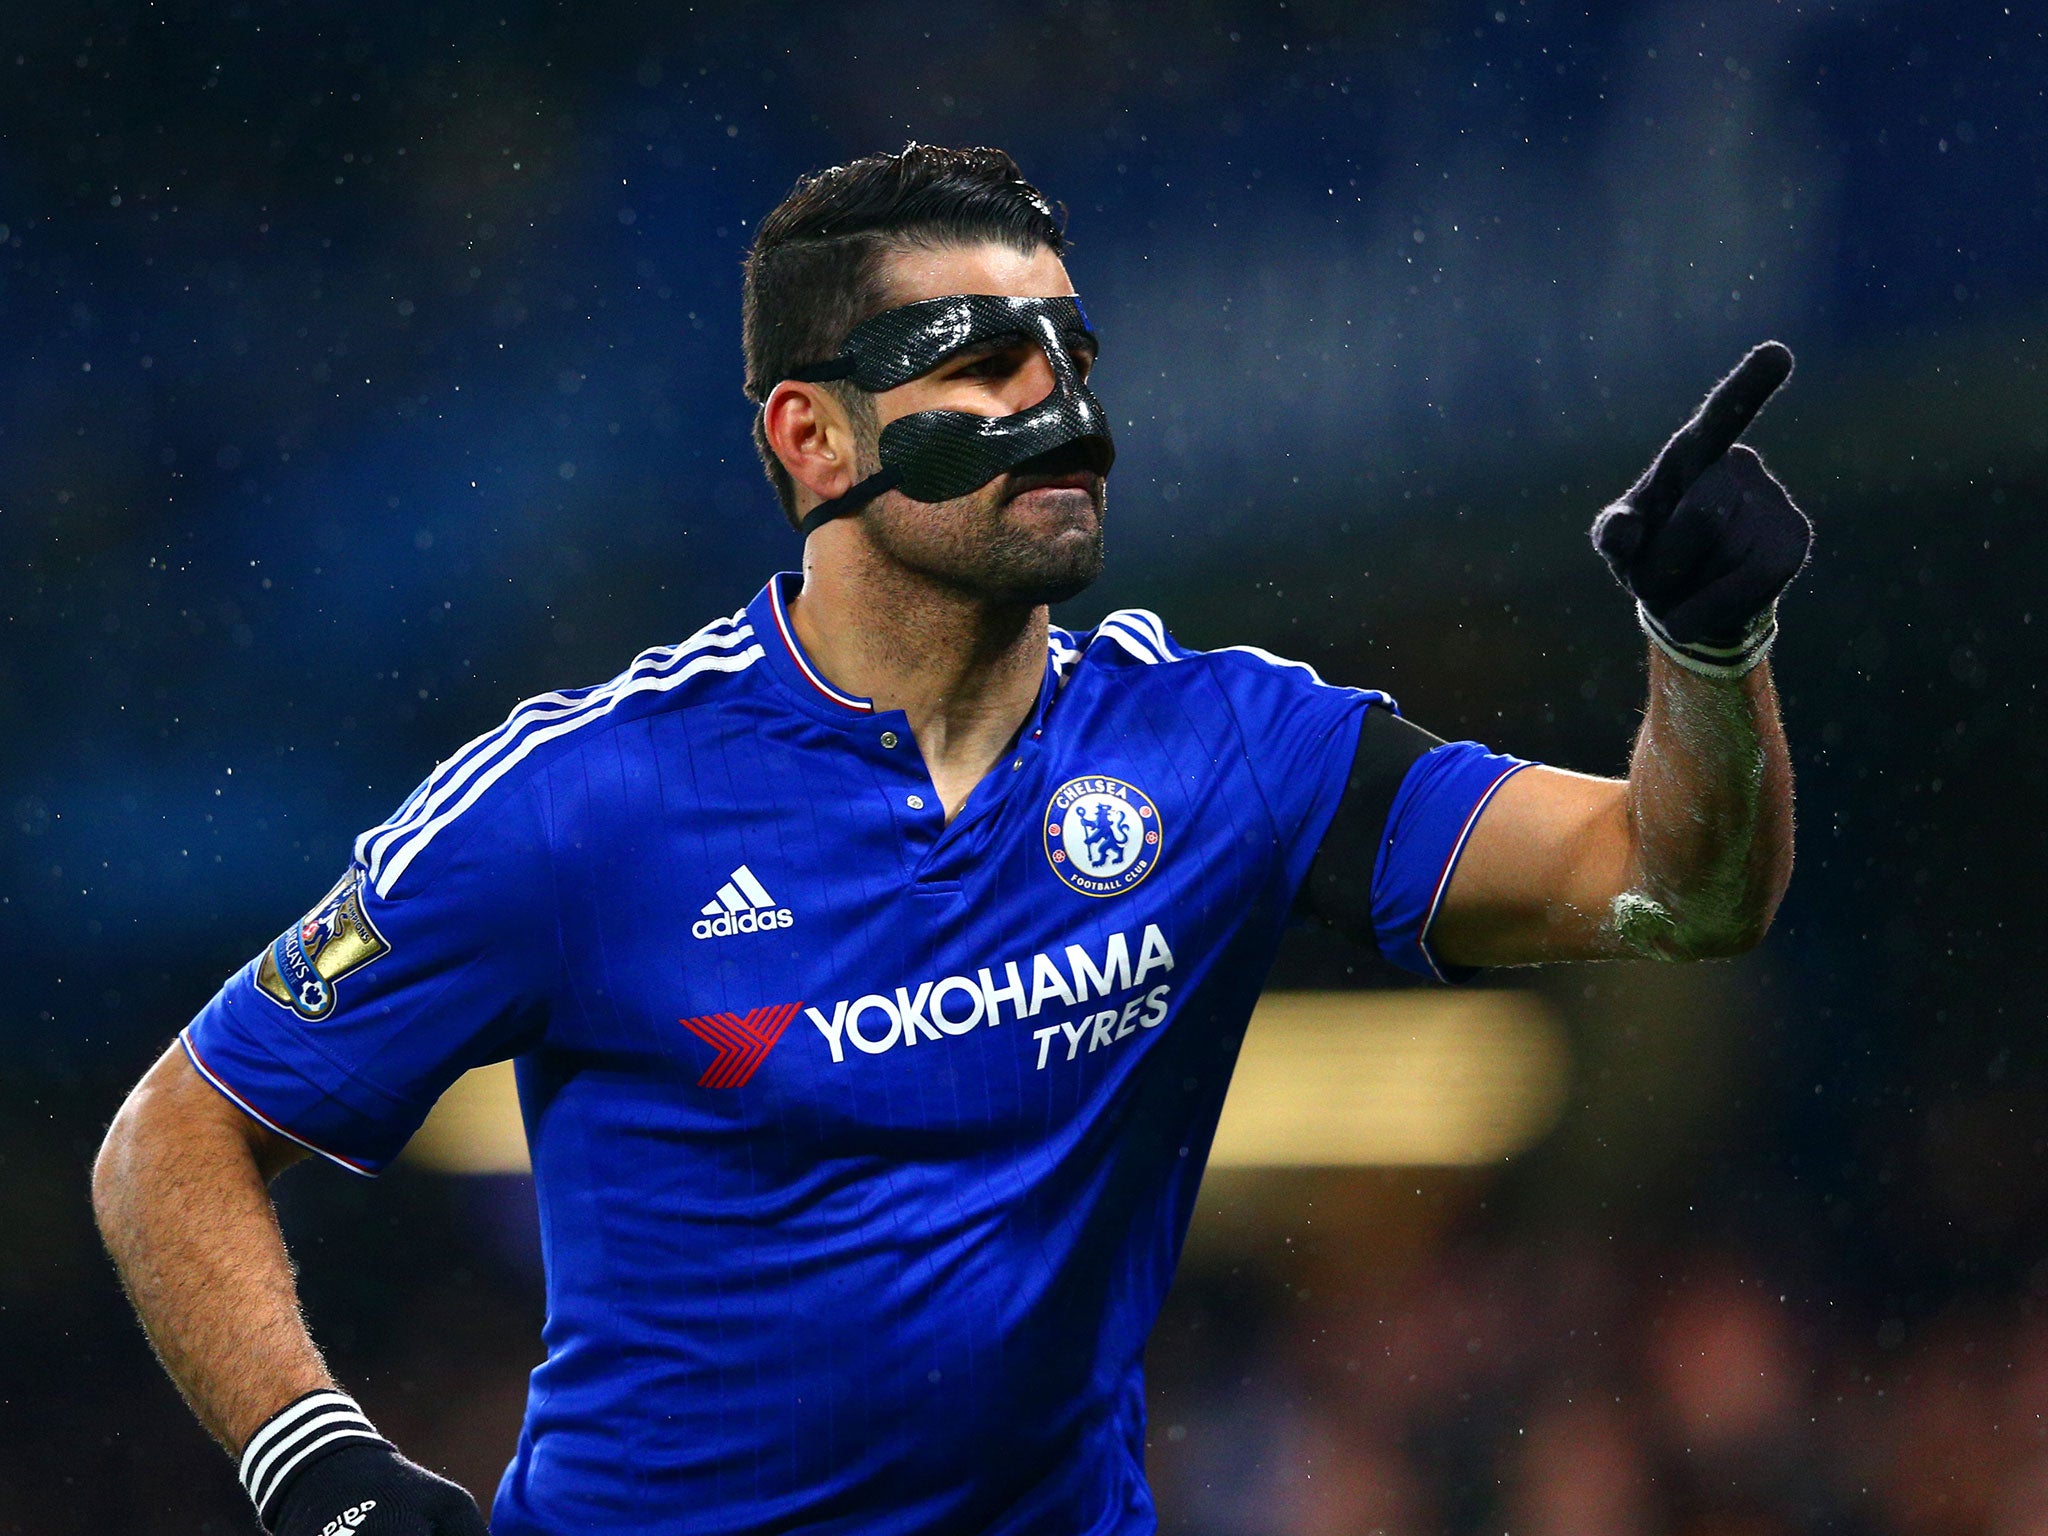 Chelsea striker Diego Costa celebrates scoring against Newcastle